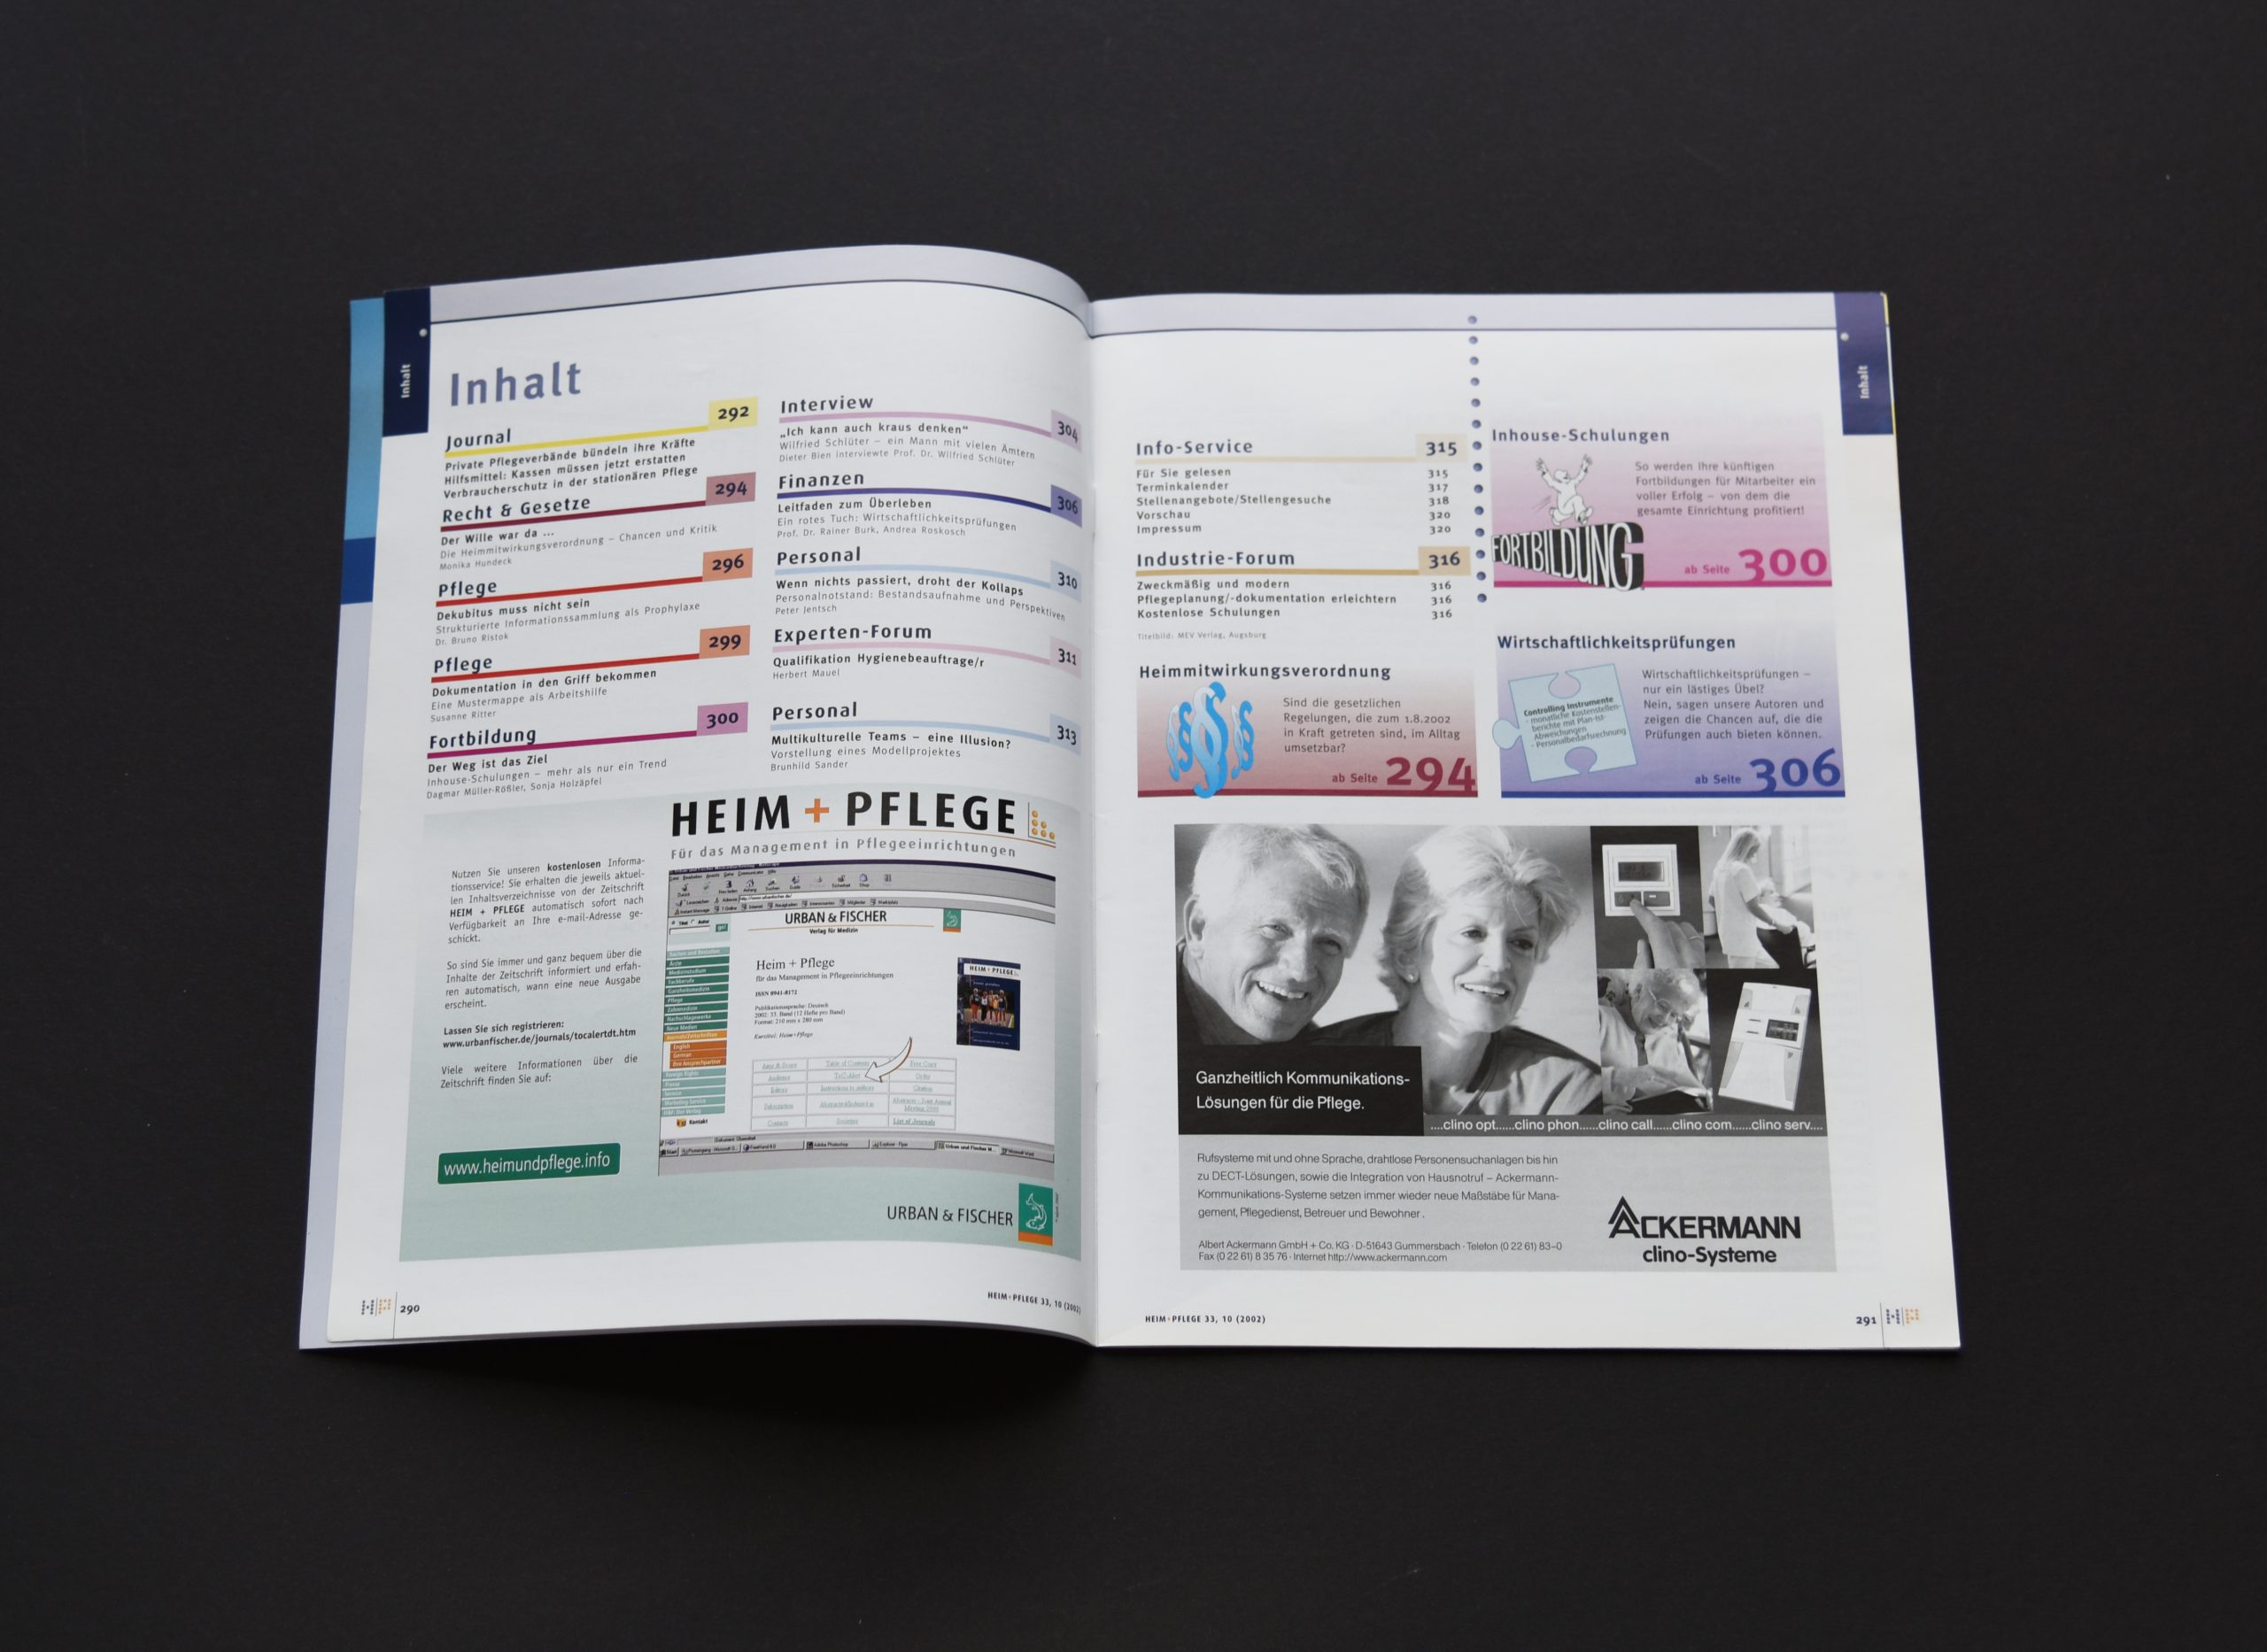 print | ELSEVIER (Publishing house) | Medical management magazine Heim und Pflege (Content)